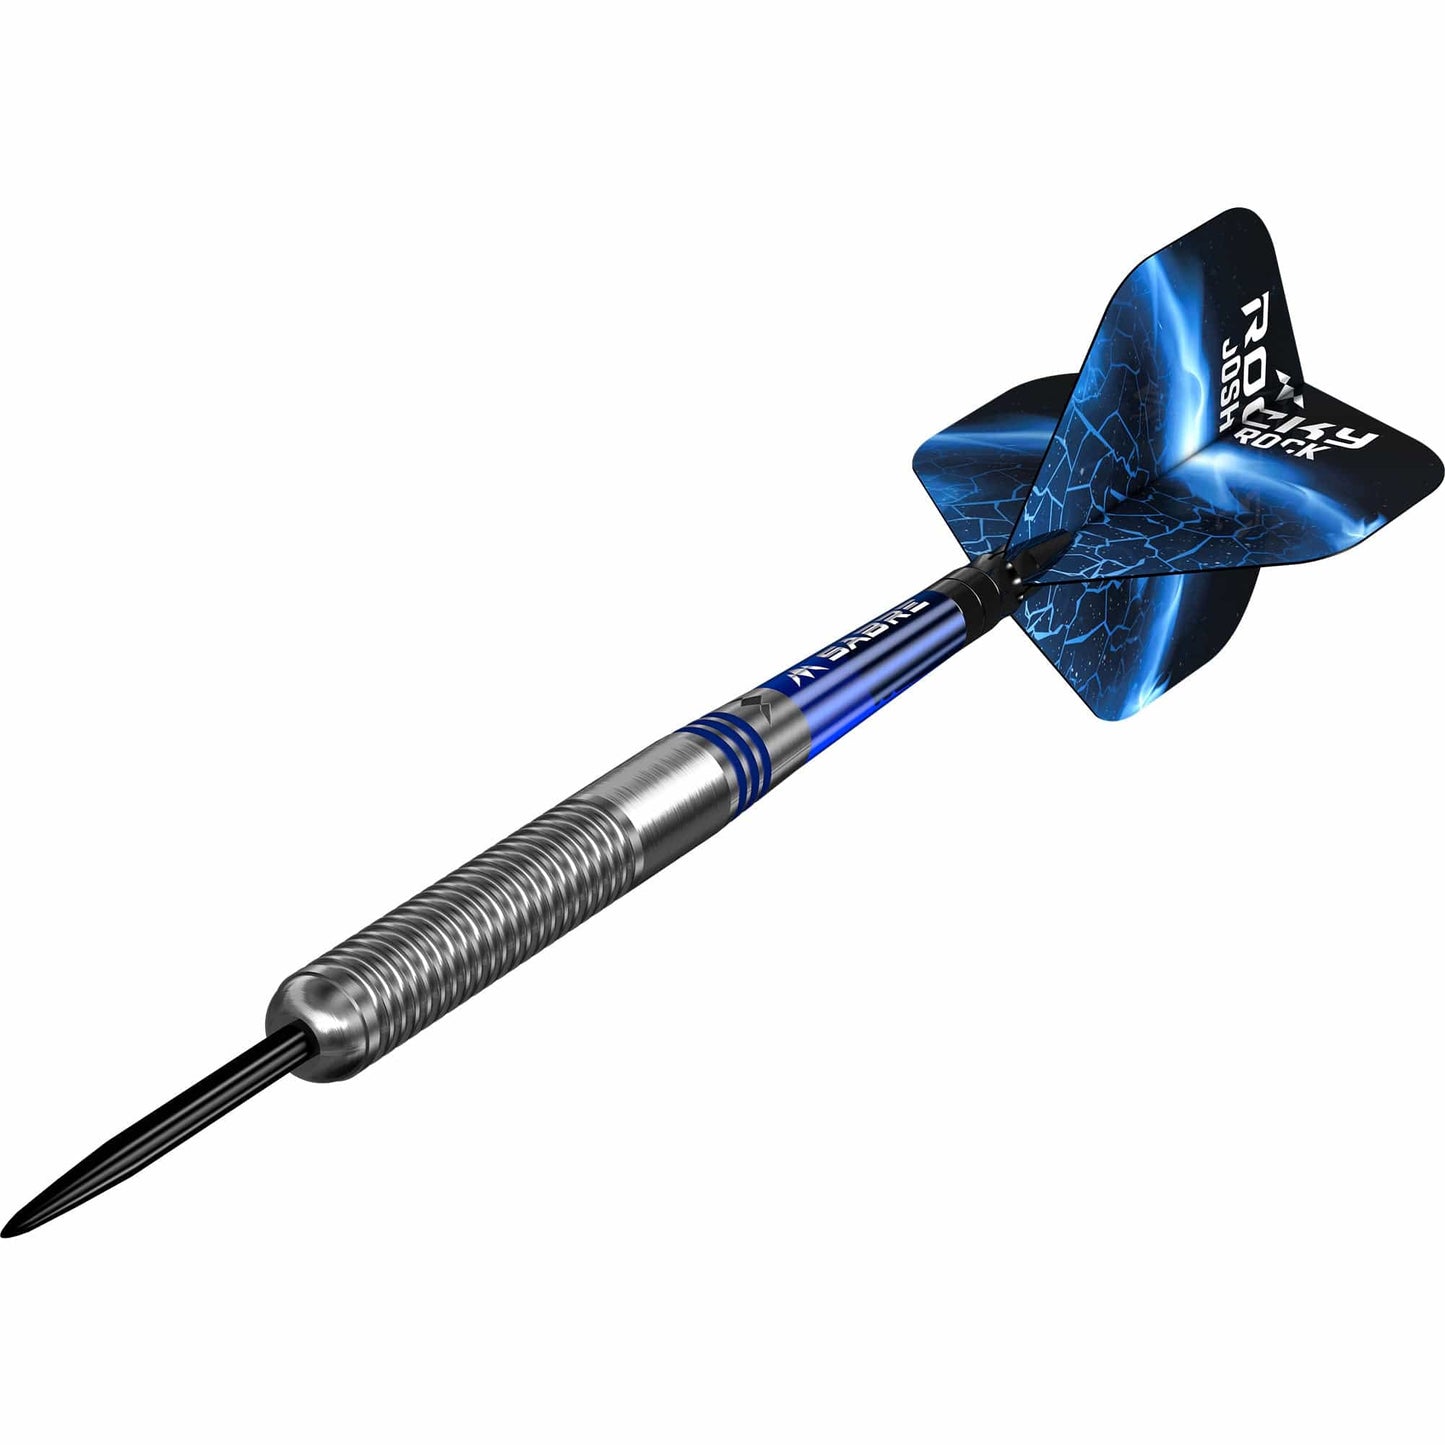 Mission Josh Rock v2 Darts - Steel Tip - 95% - Silver & Blue PVD